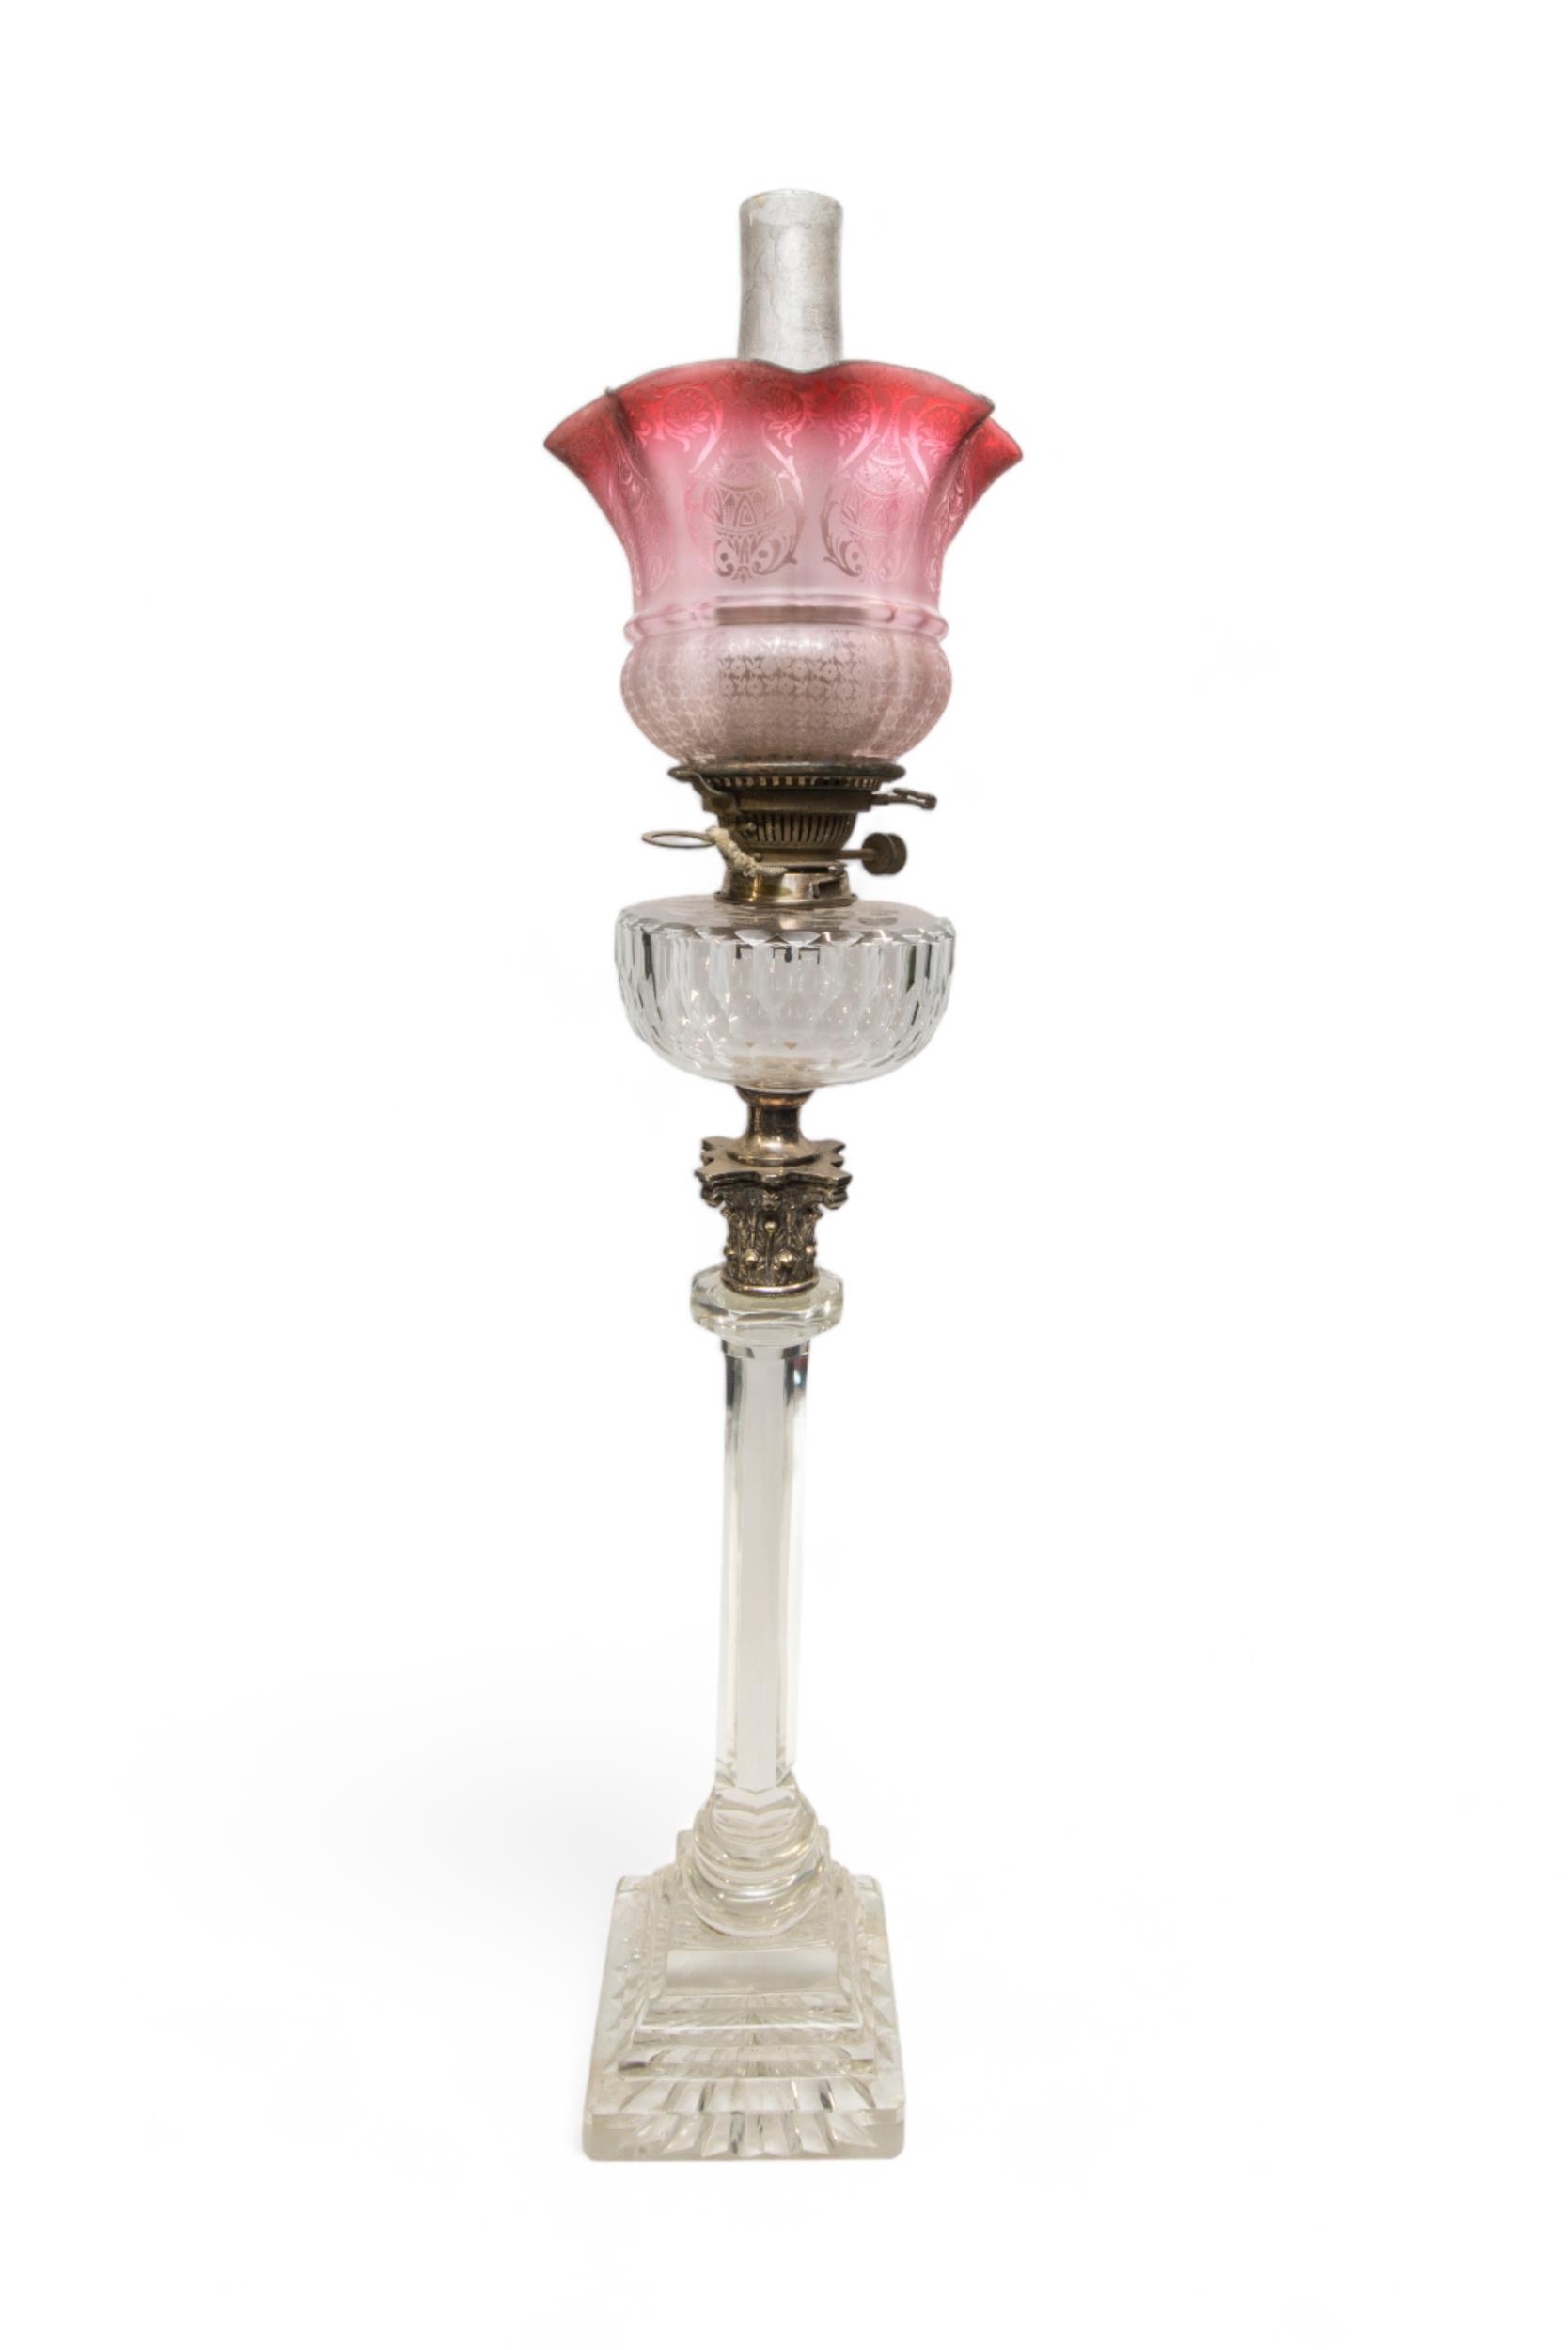 A VICTORIAN OIL LAMP, the hexagonal glass column with metal Corinthian column top with cut glass